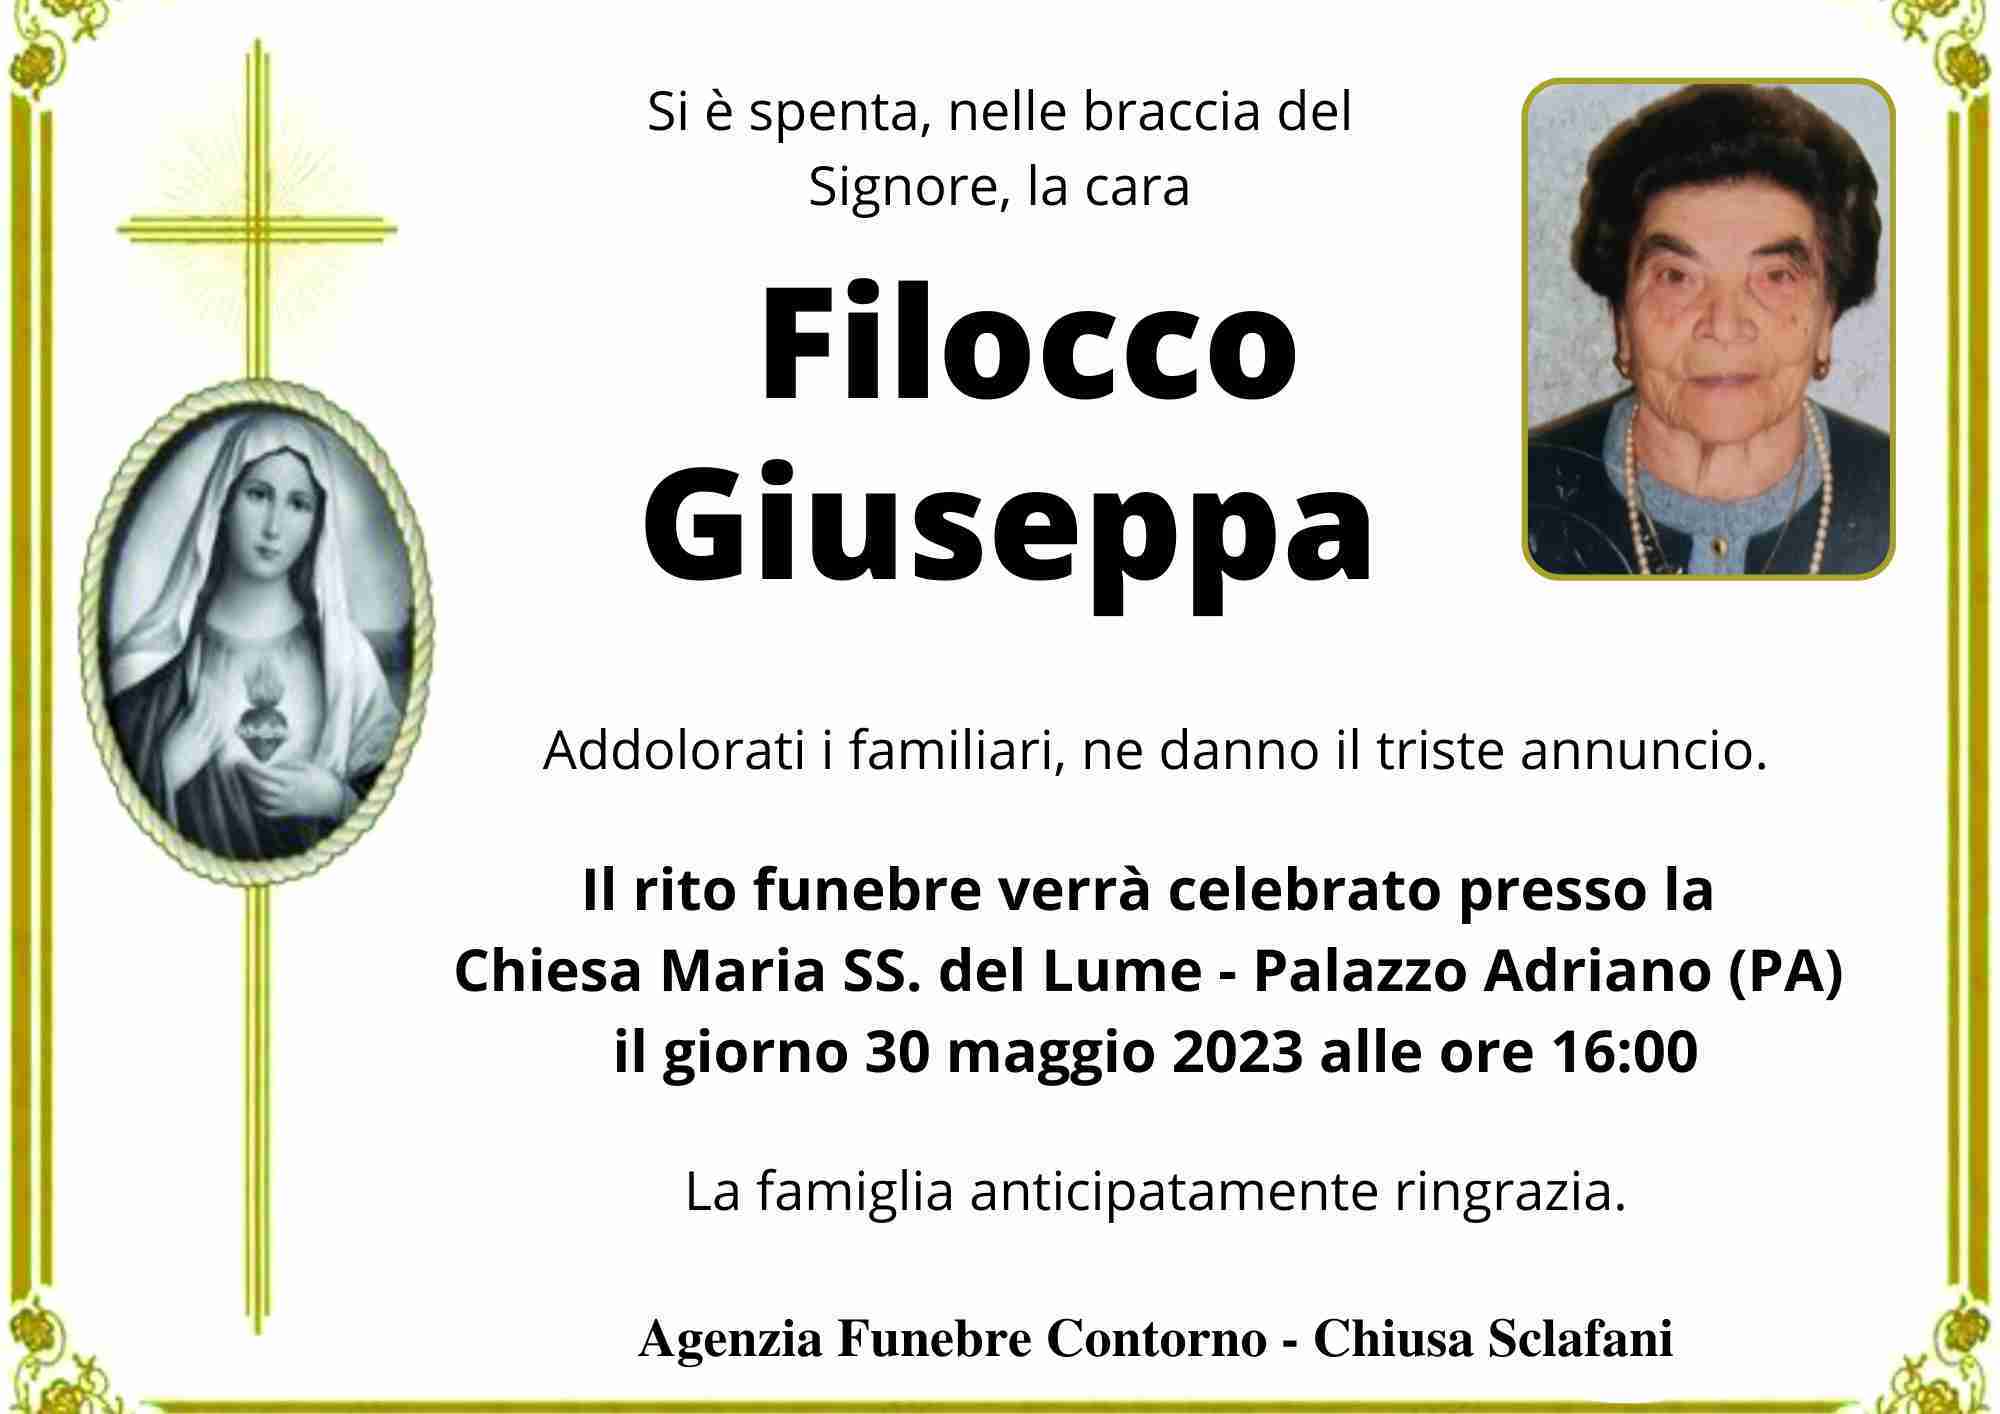 Giuseppa Filocco